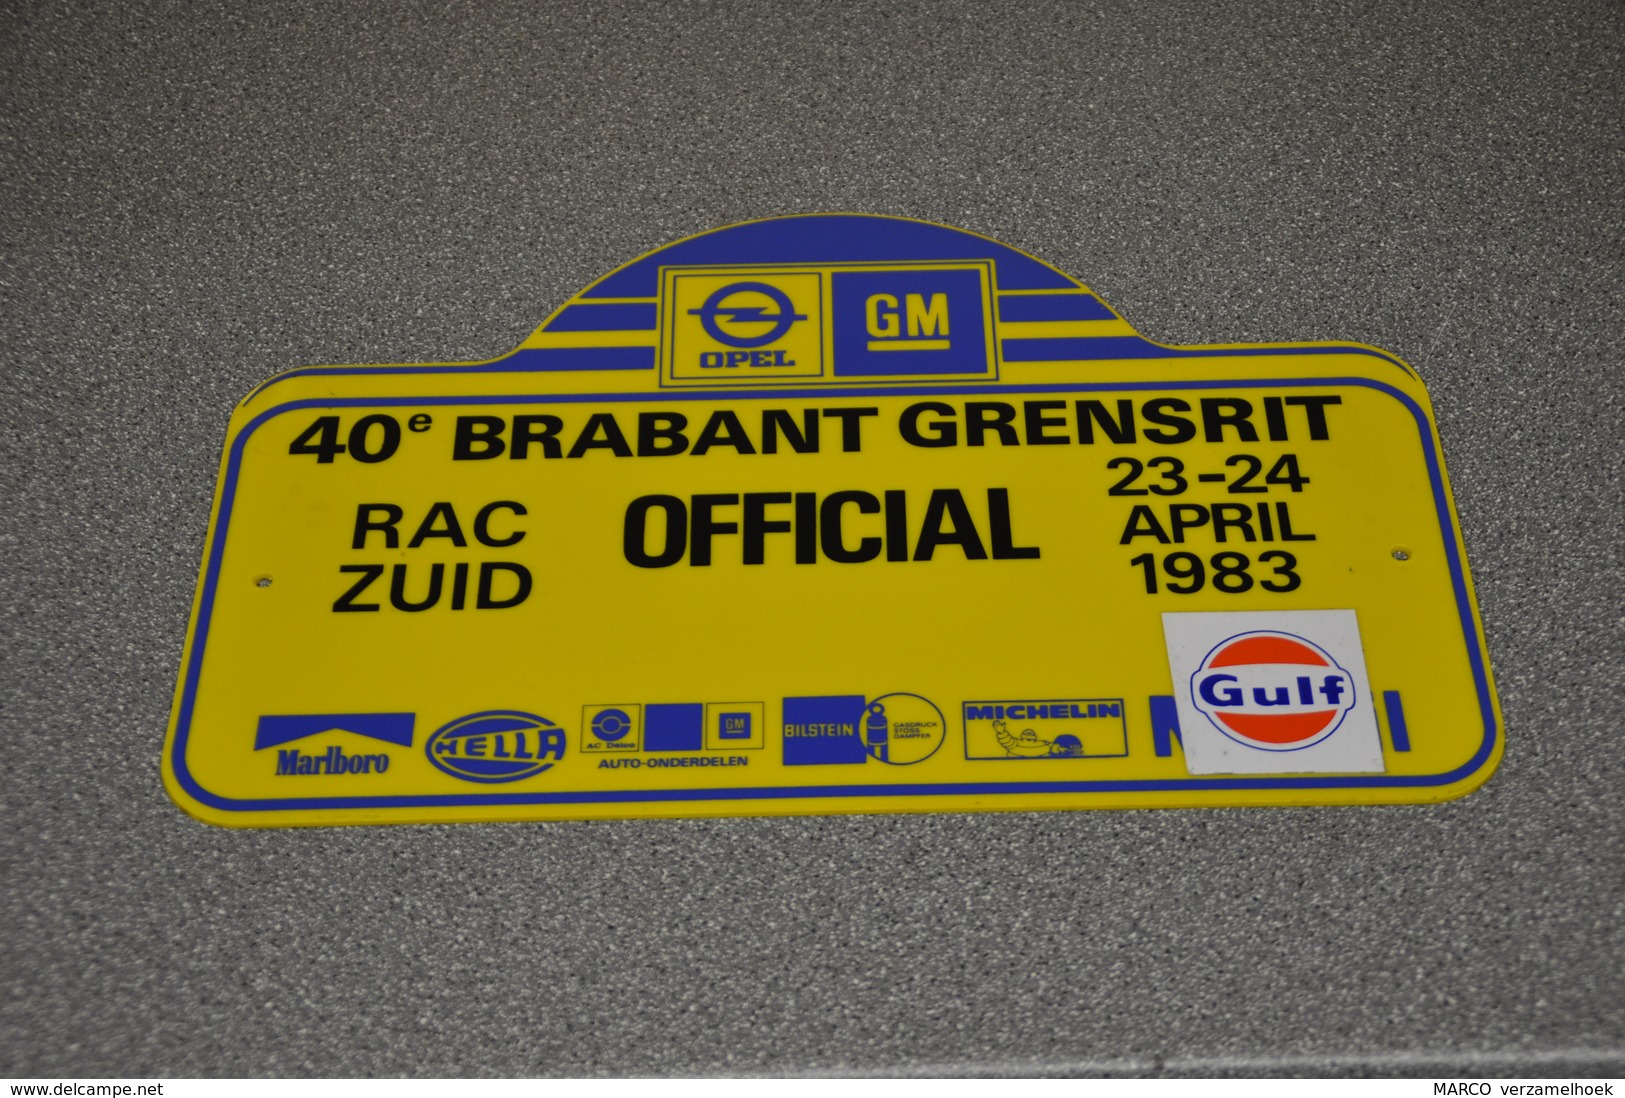 Rally Plaat-rallye Plaque Plastic: 40e Brabant-grensrit OFFICIAL 1983 RAC-zuid Opel-GM-marlboro-hella-michelin-gulf - Plaques De Rallye